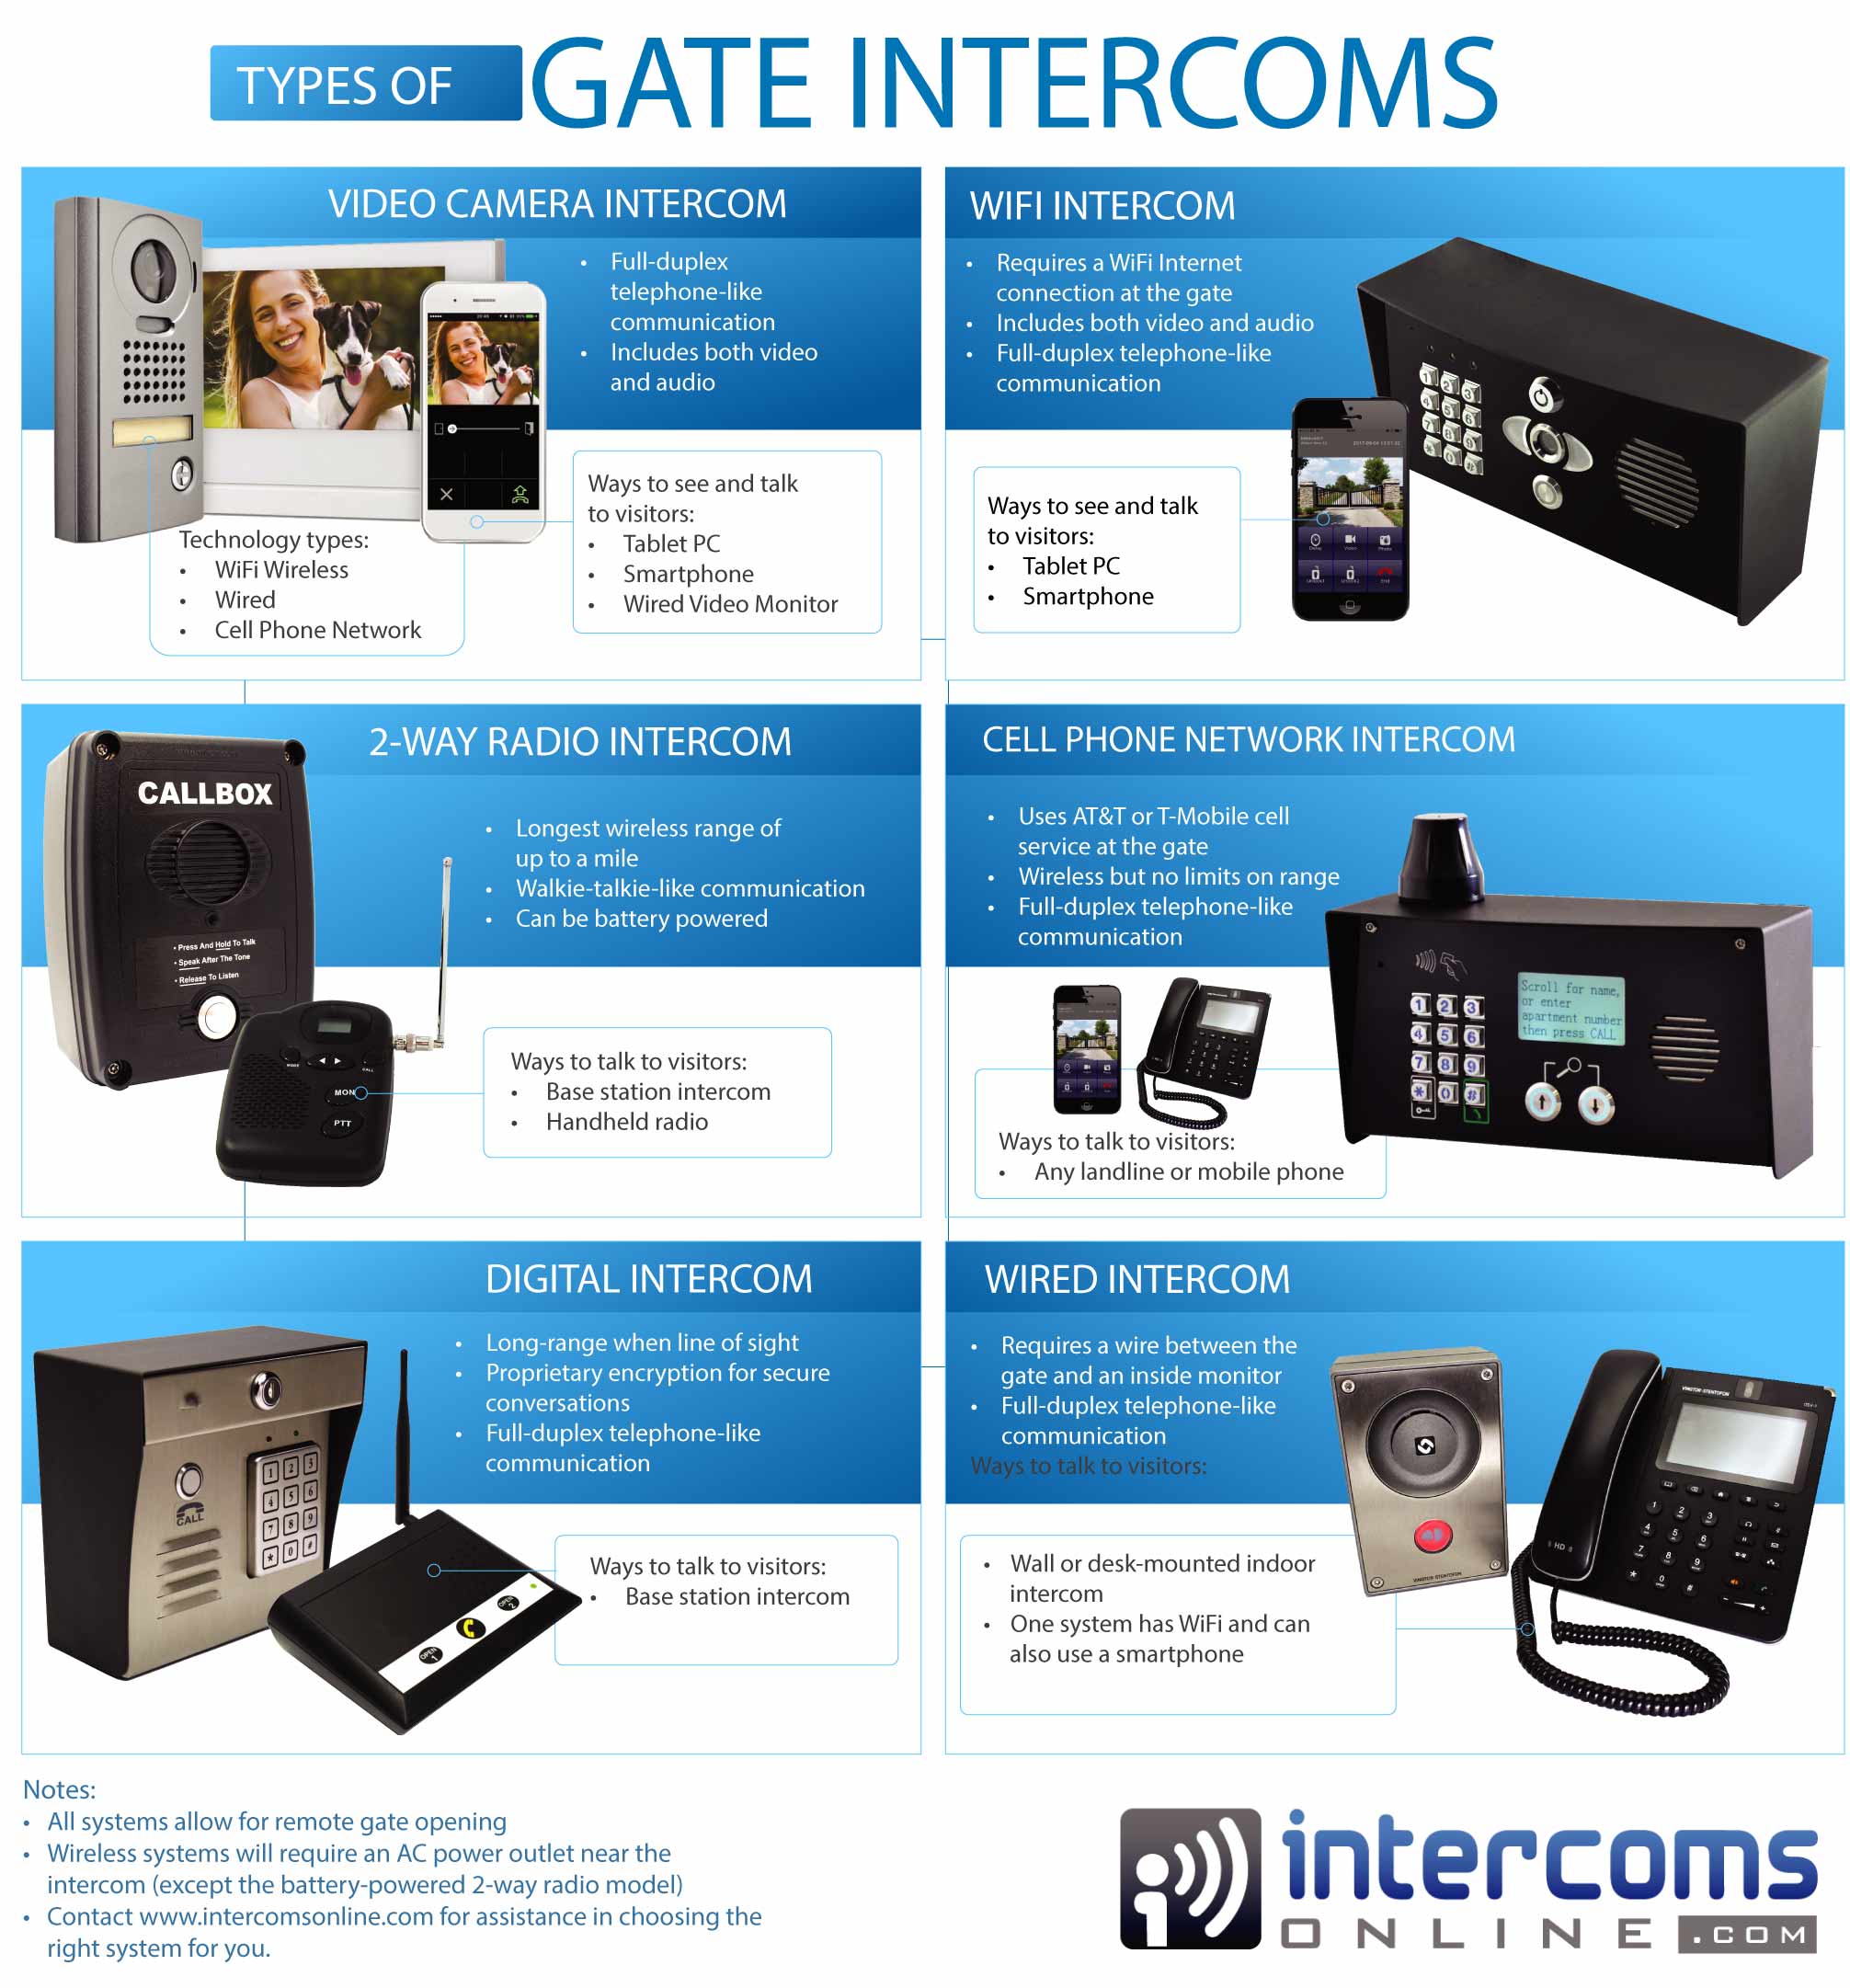 2-wire intercom system - hands-free